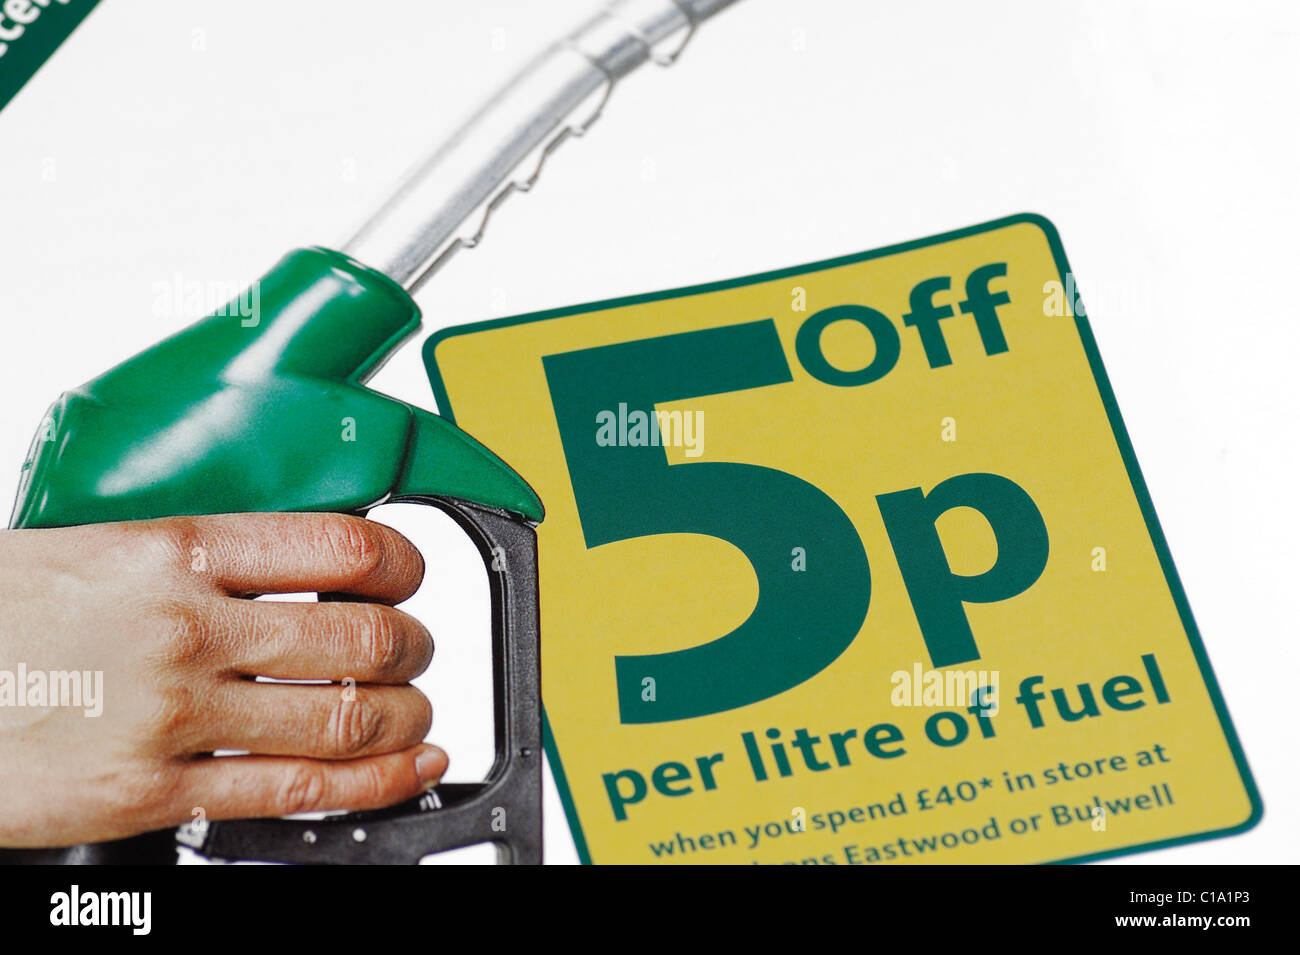 petrol supermarket discount voucher england uk Stock Photo